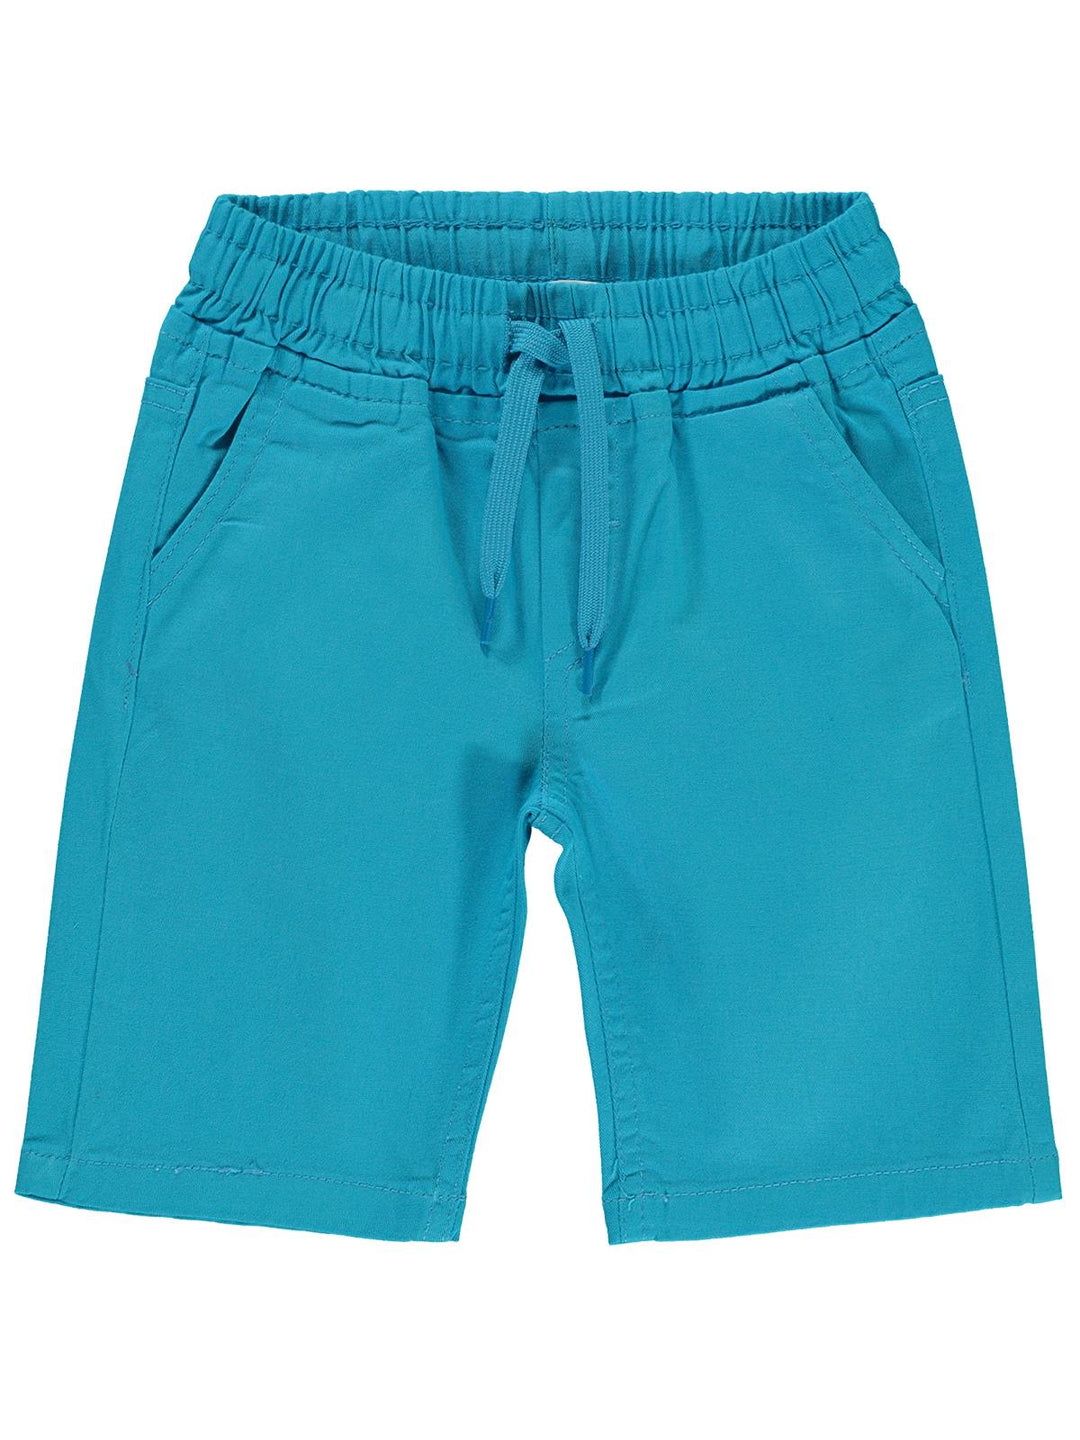 Civil Boys Cotton Shorts #2204-3 (S-22)